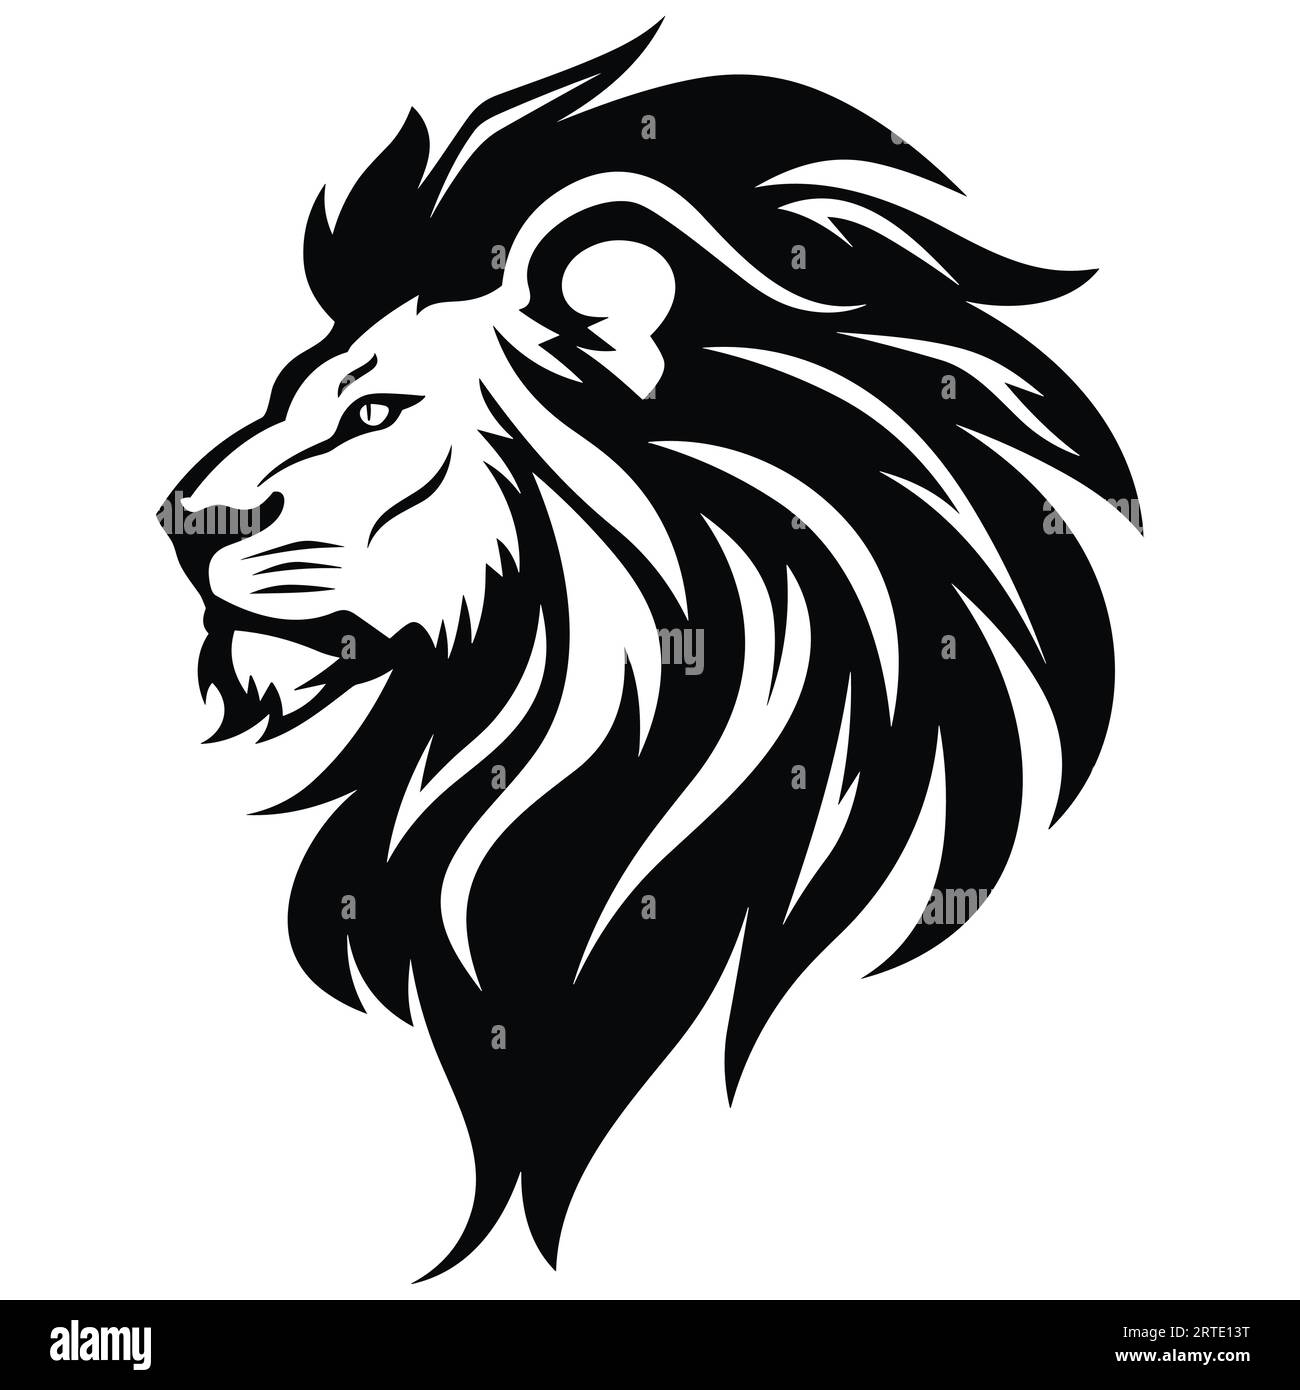 Lion monochrome icon vector illustration Stock Vector